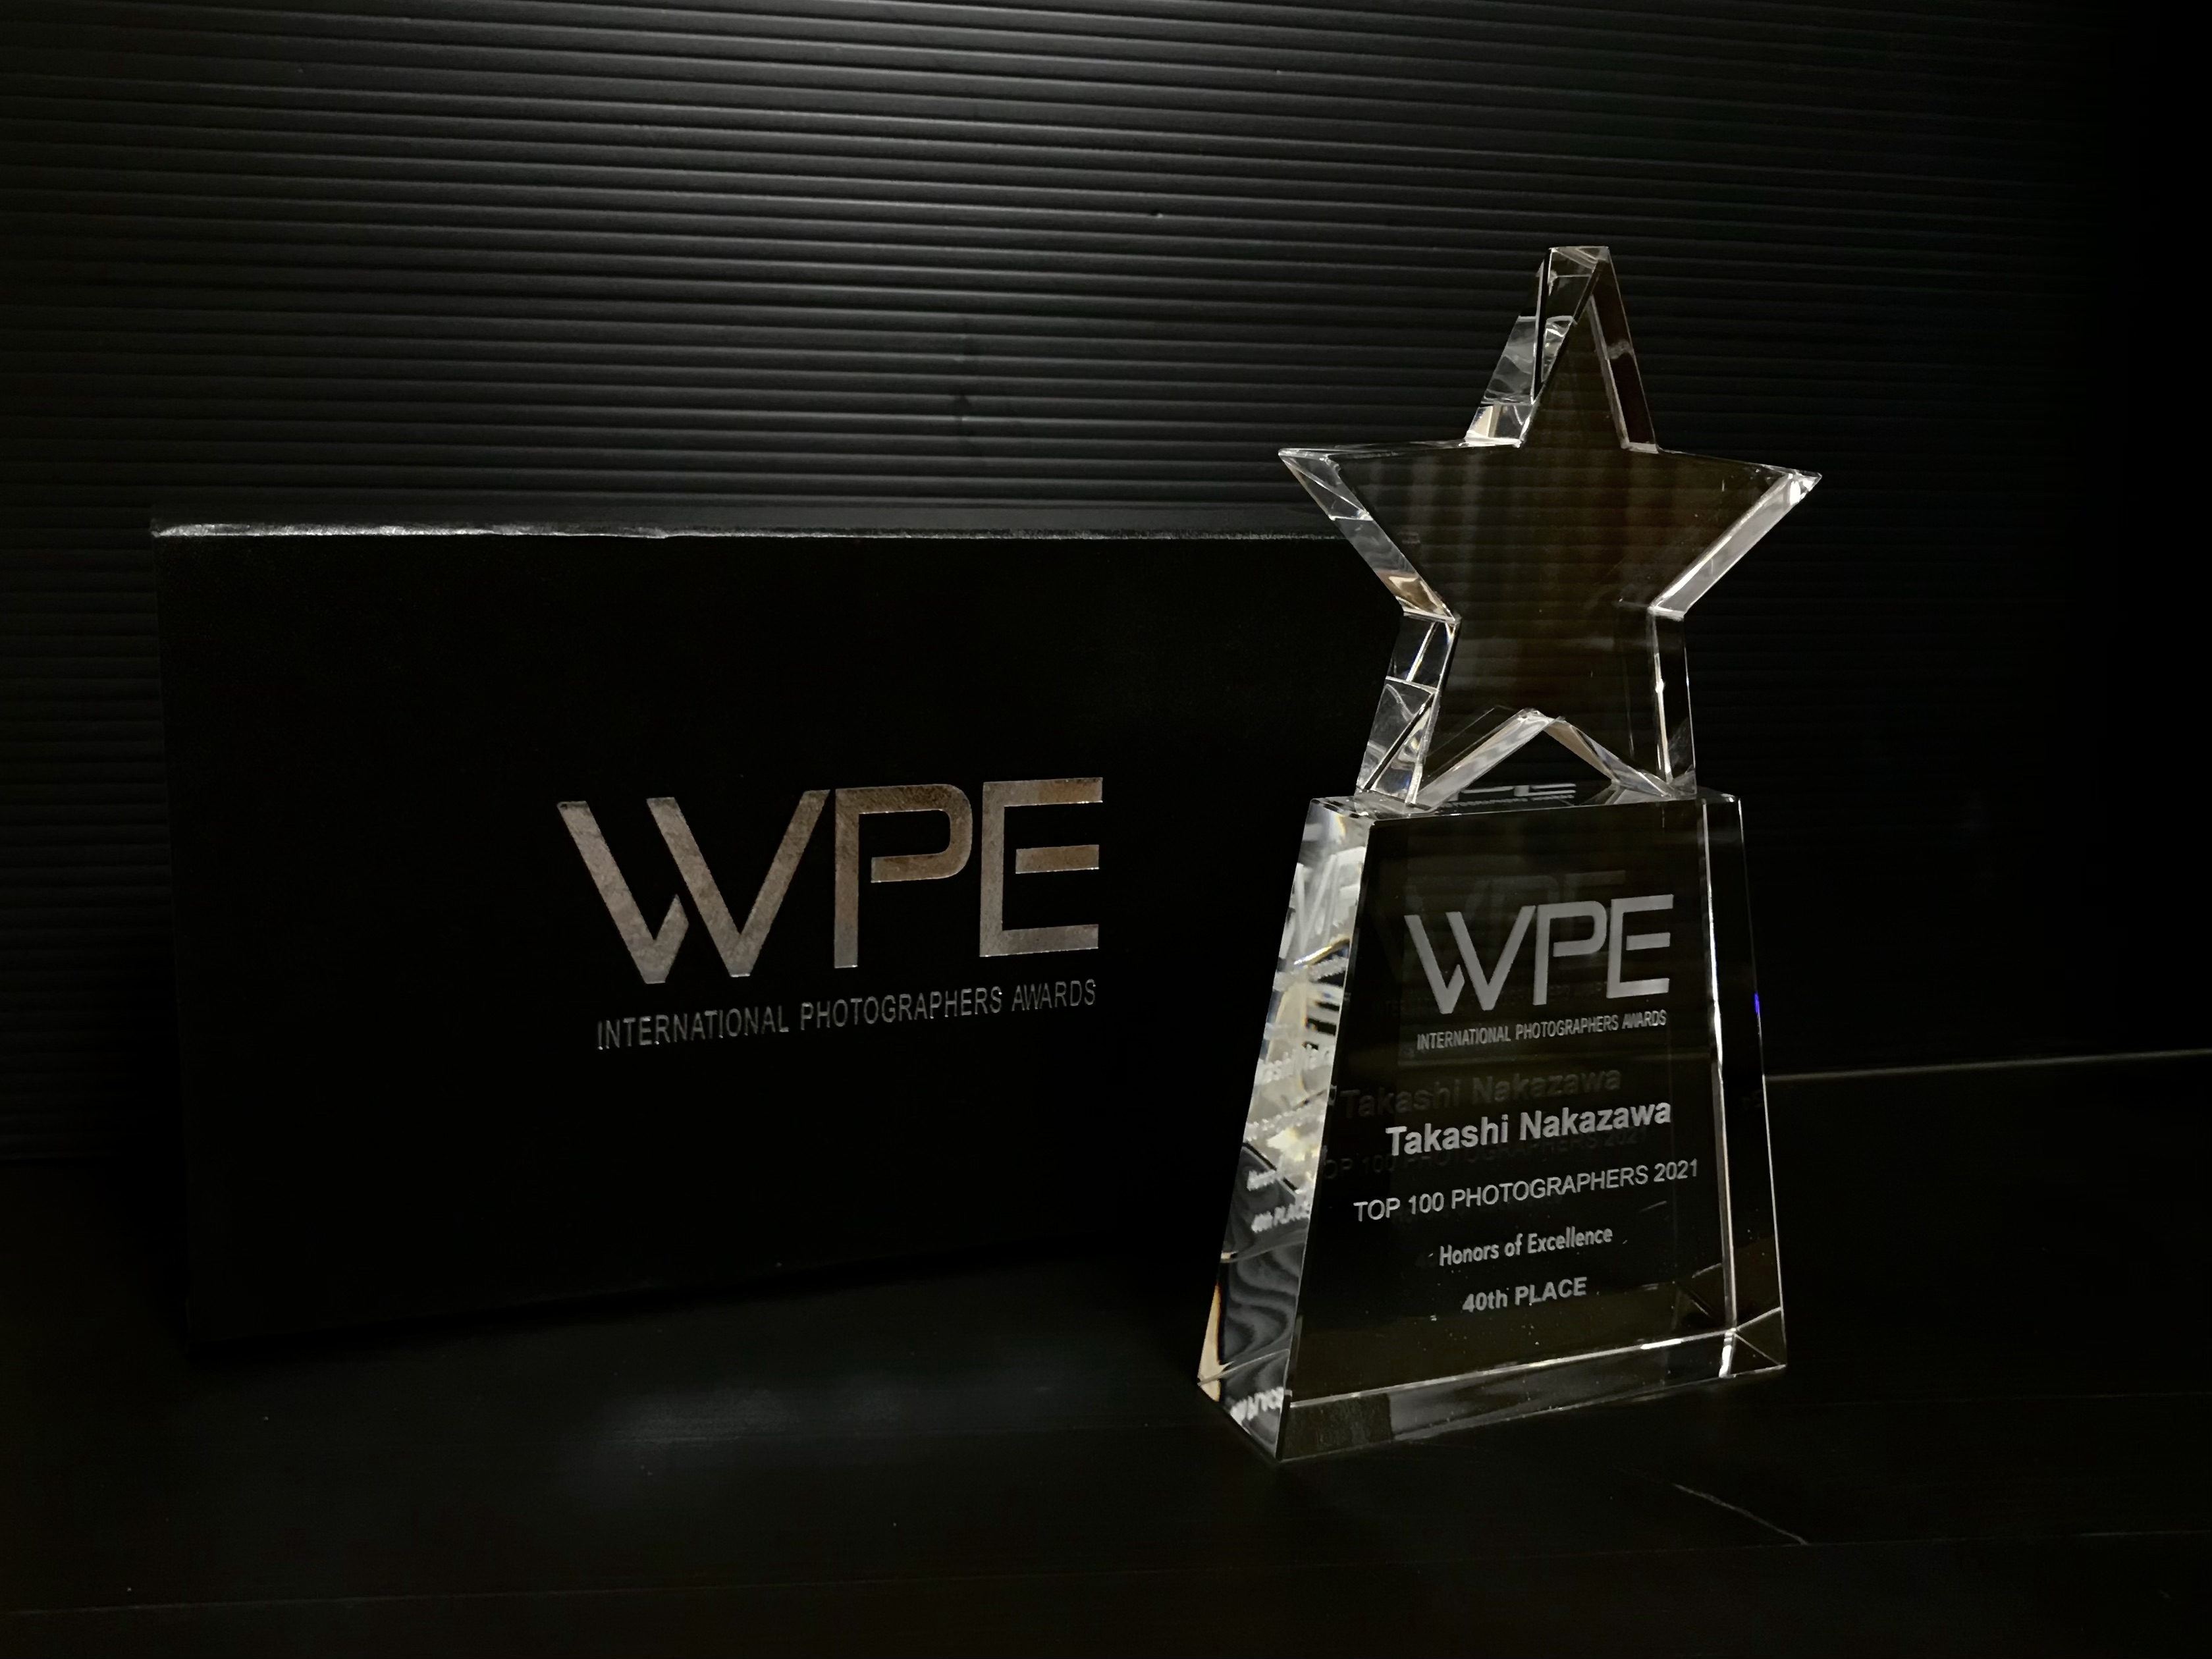 WPE Awardsで日本から唯一 Top 100 Photographers 2021を獲得